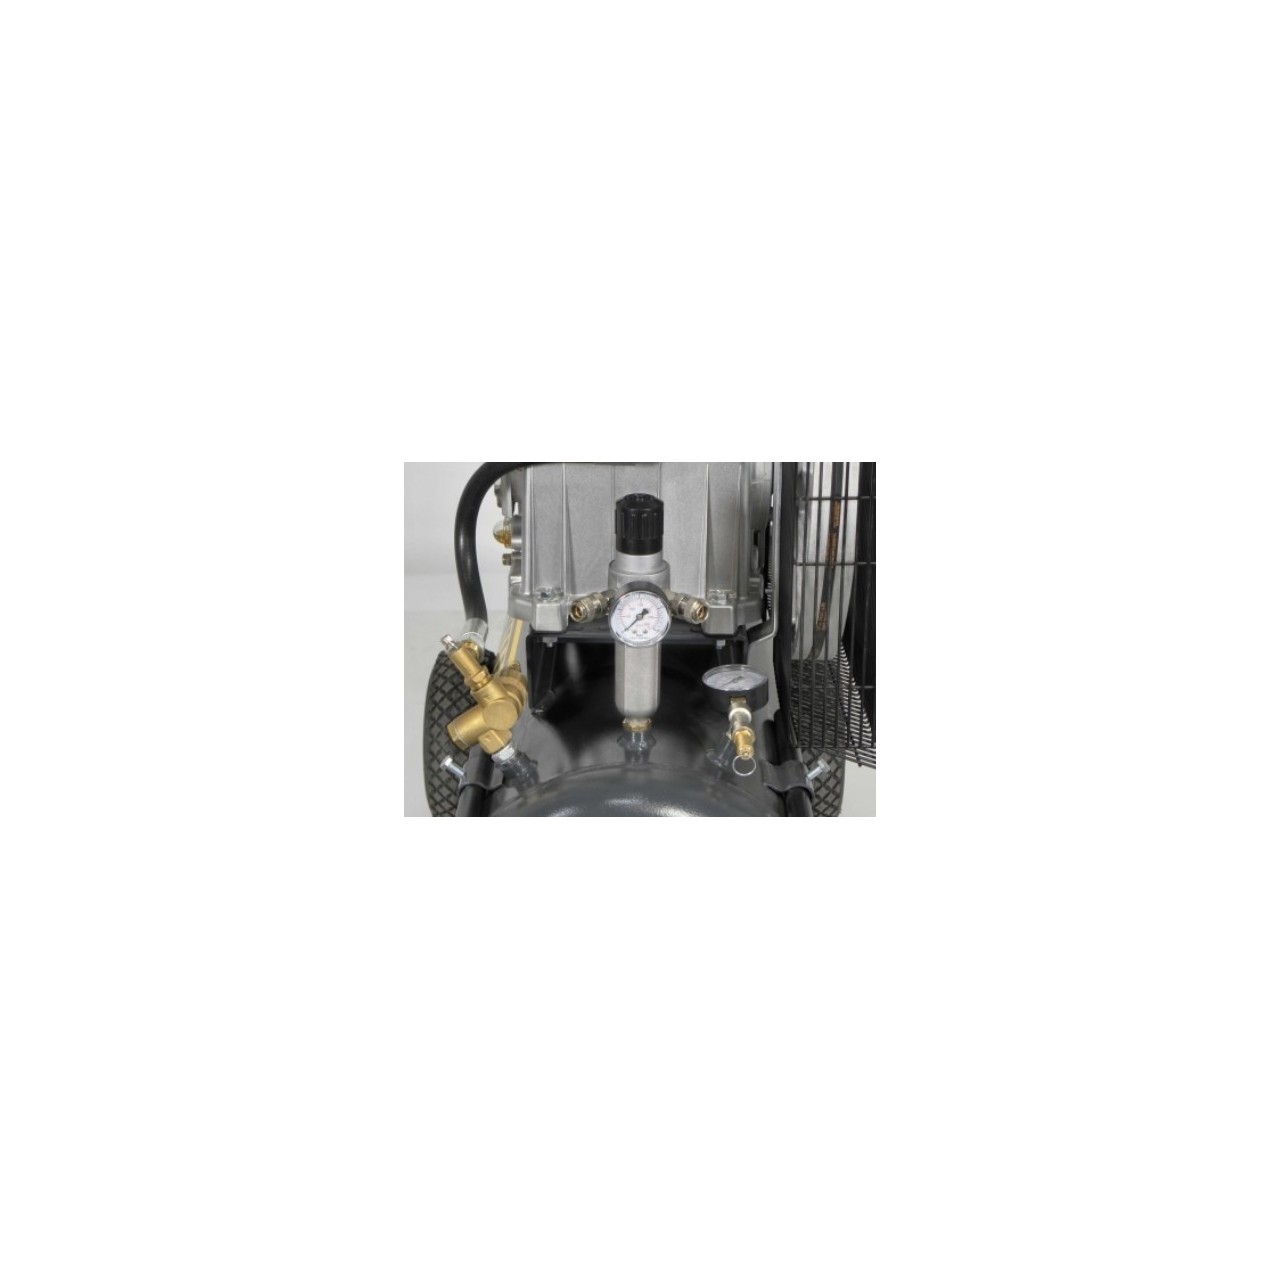 Compresor de pistón Nuair B3800 gasolina 5,5cv 100L